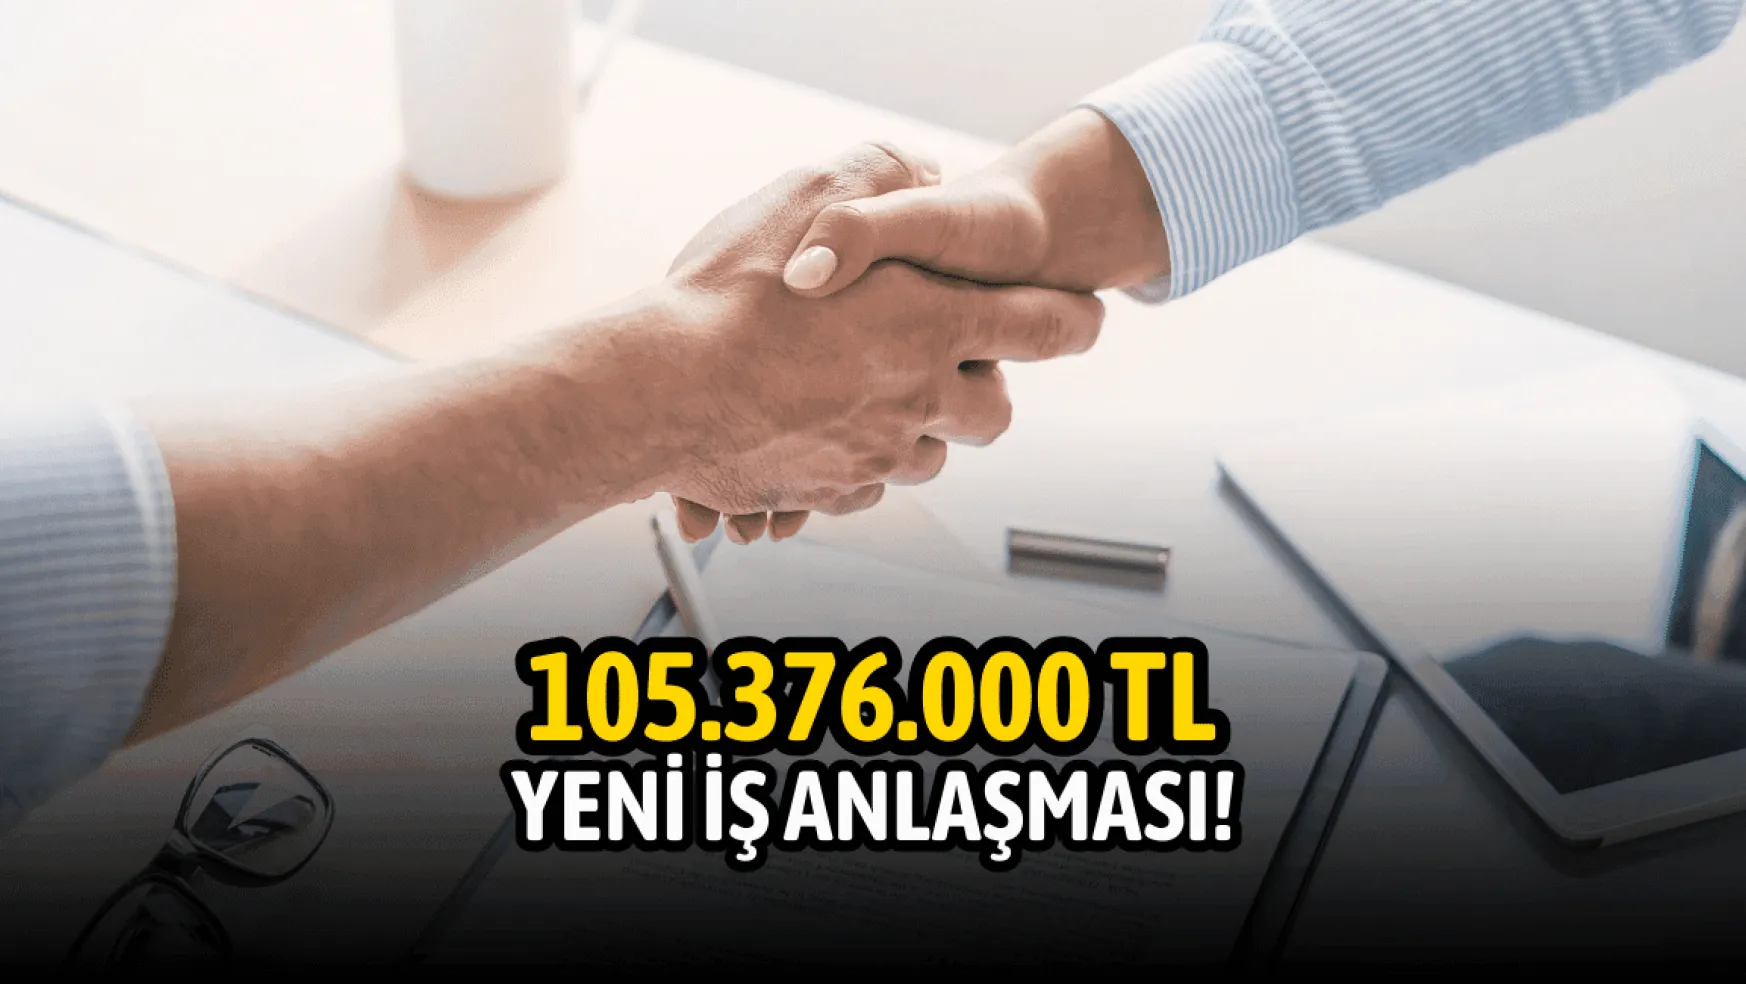 105.376.000 TL iş anlaşması açıklandı!